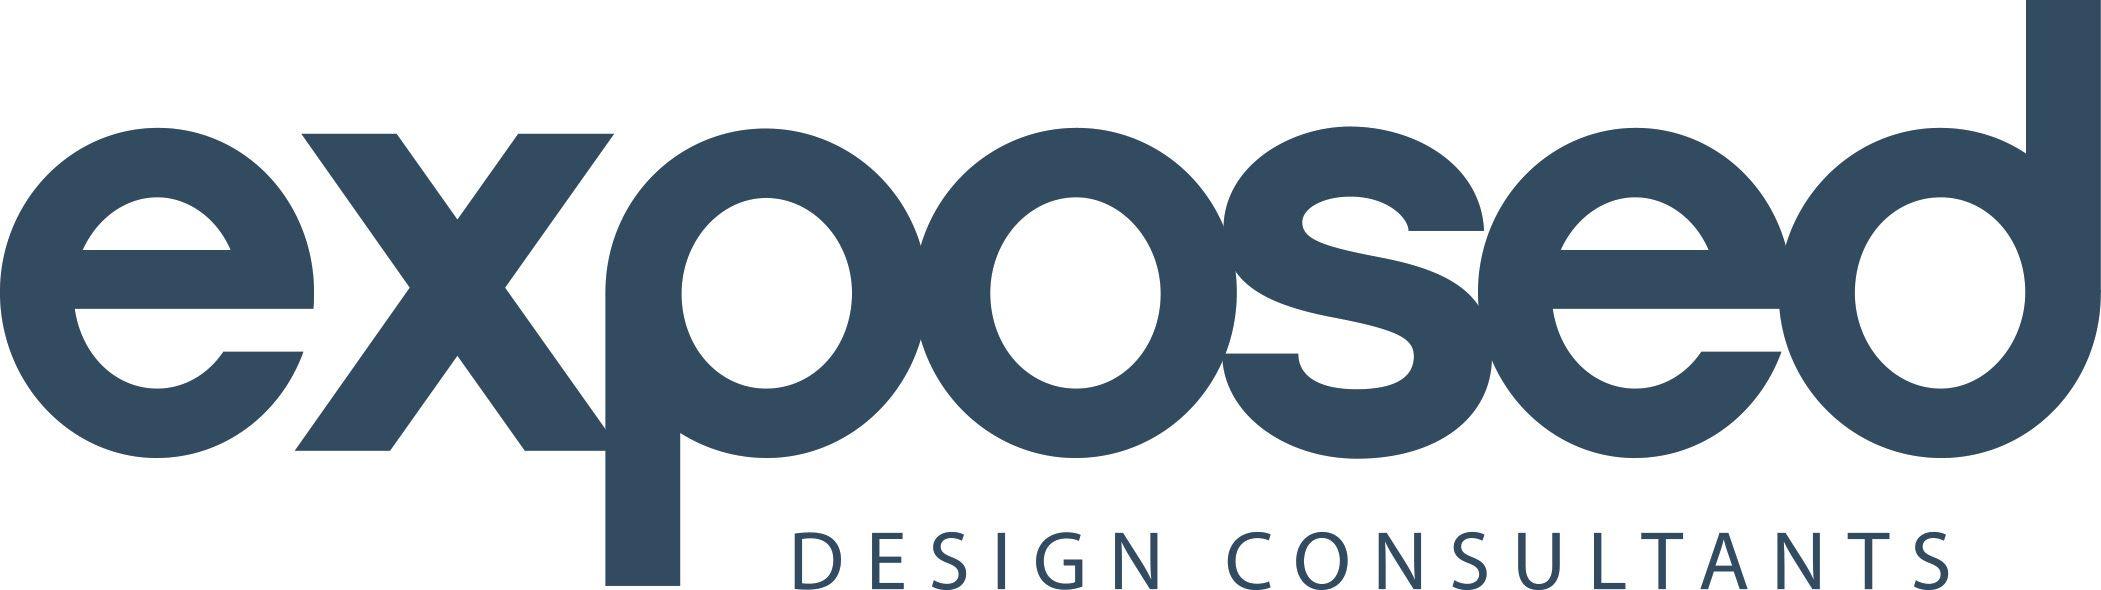 686 Fashion Logo - Graphic Designers London. Exposed Design Consultants